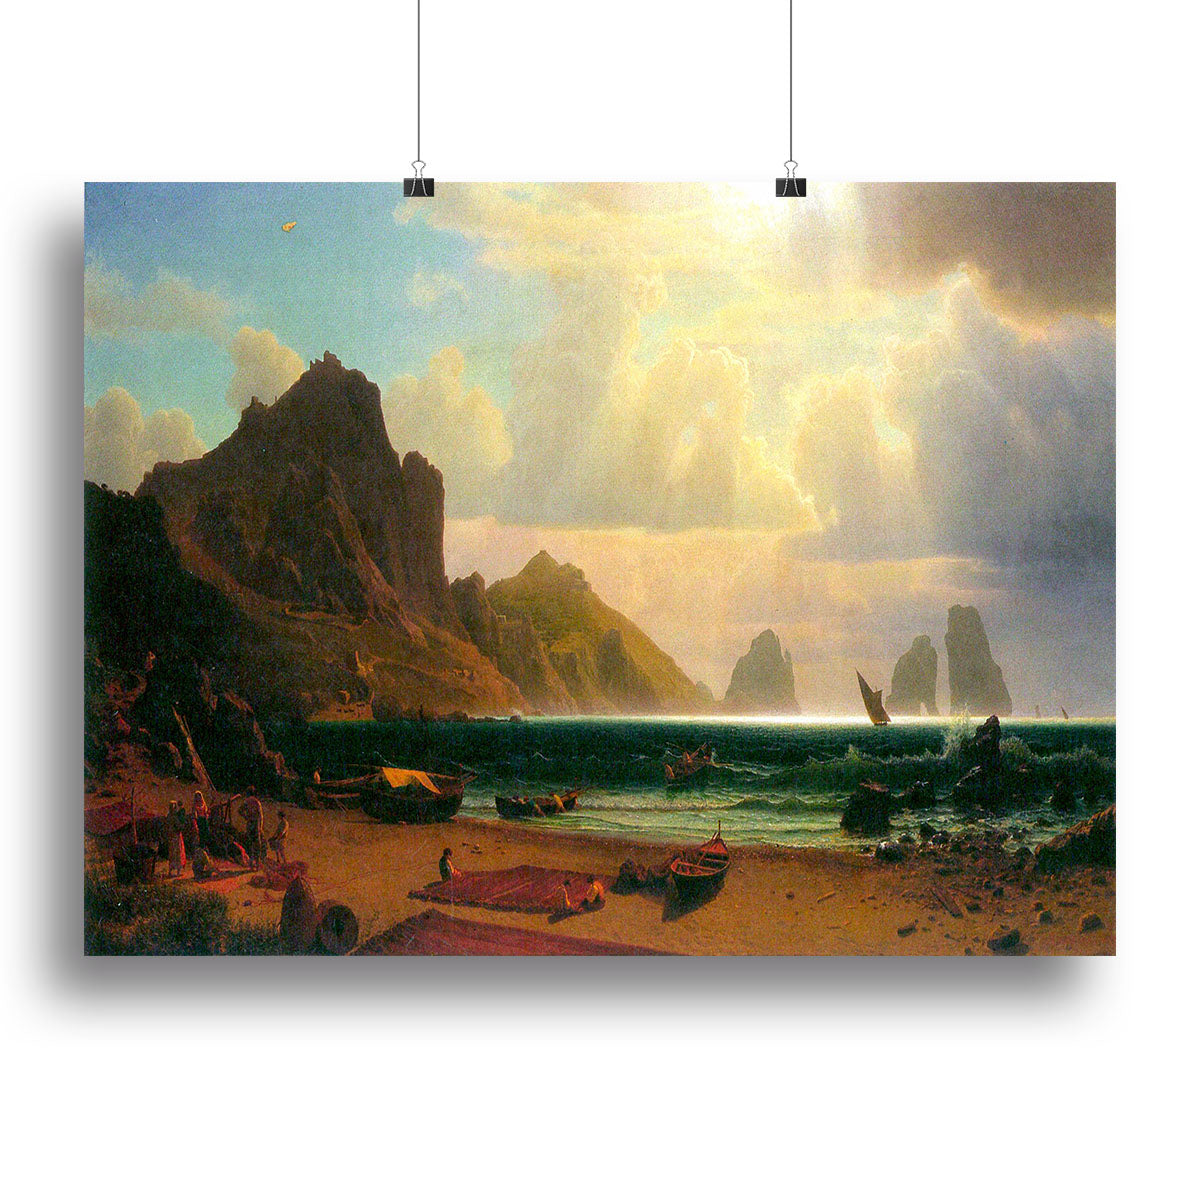 Marina Piccola Capri by Bierstadt Canvas Print or Poster - Canvas Art Rocks - 2